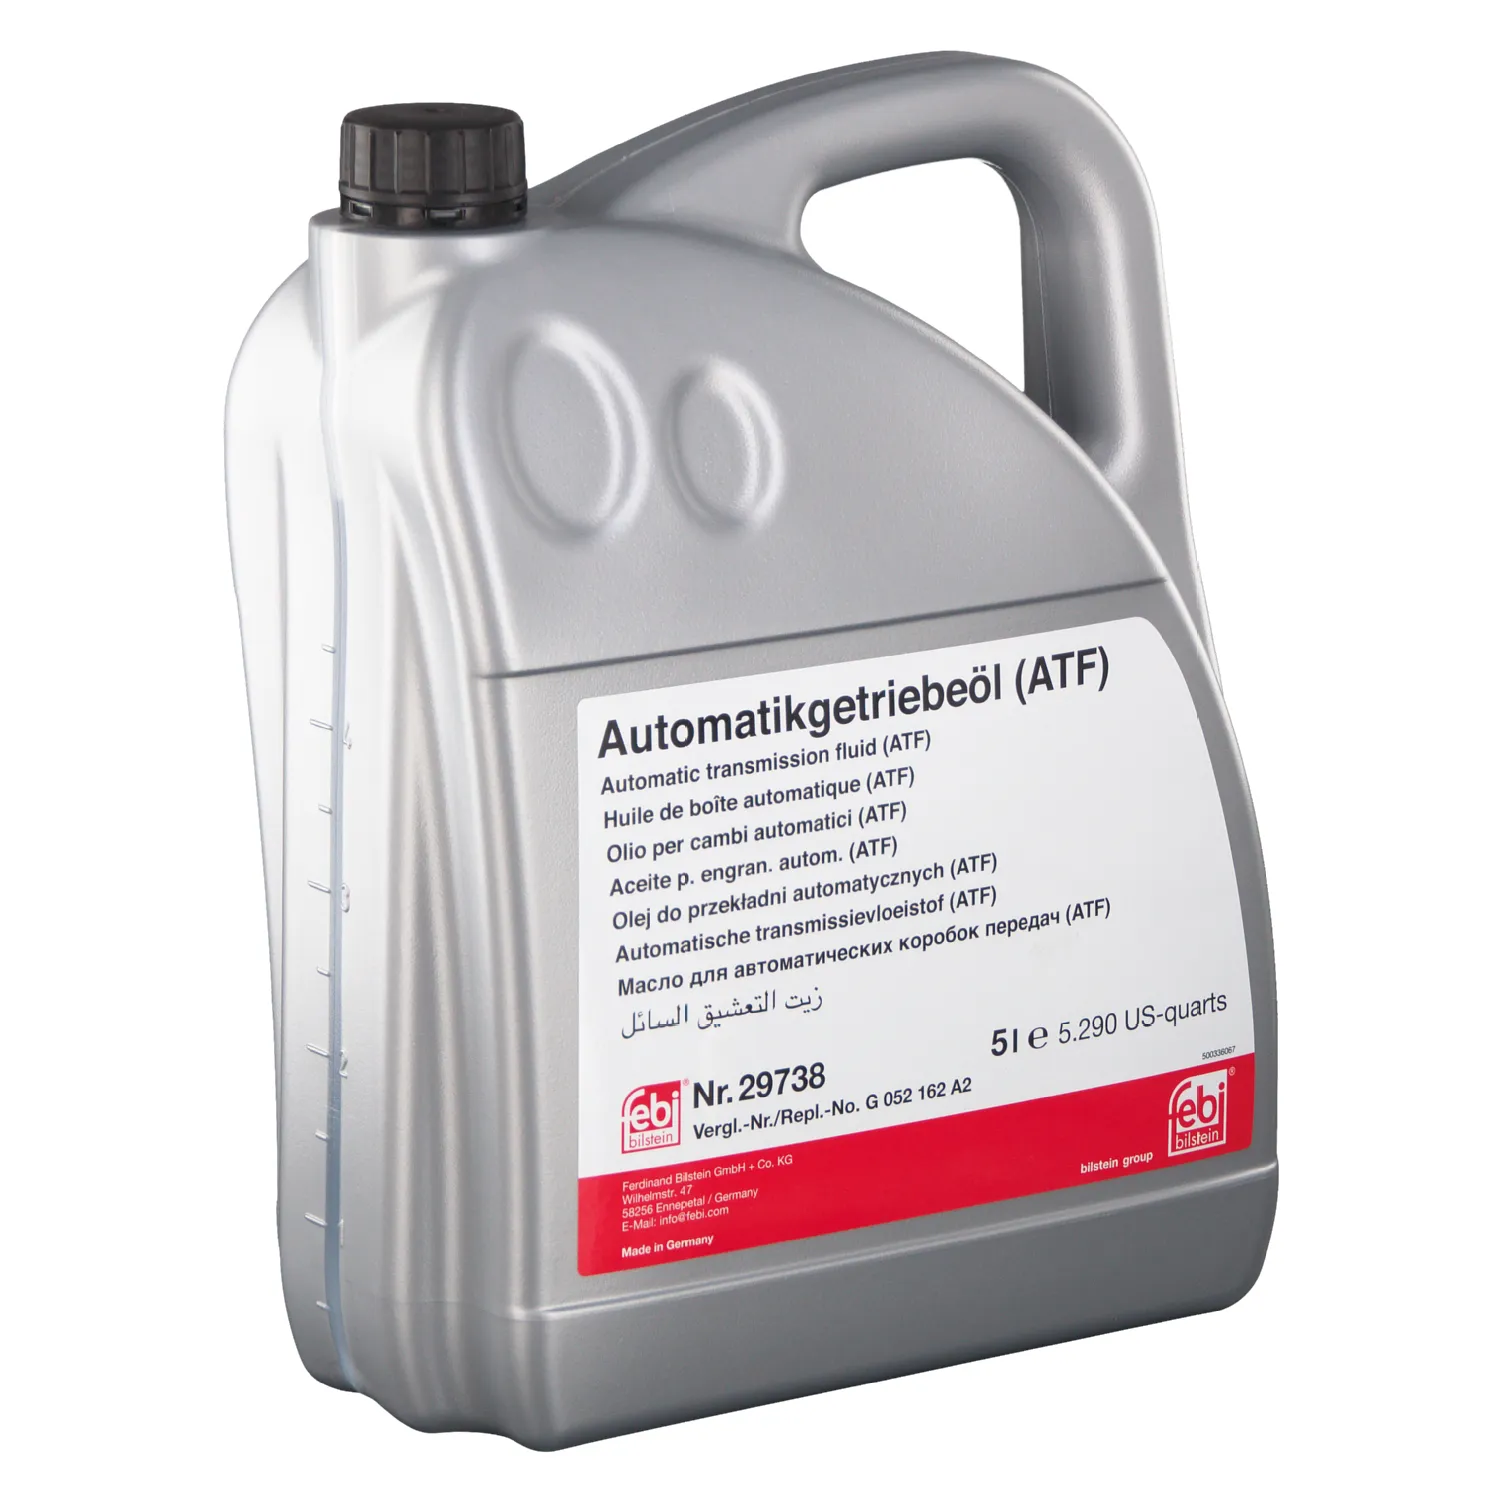 5 liter Febi Automatische Versnellingsbakolie ATF voor Audi VW Mercedes Bmw MB 236.11 LA2634 G 052 162 A2